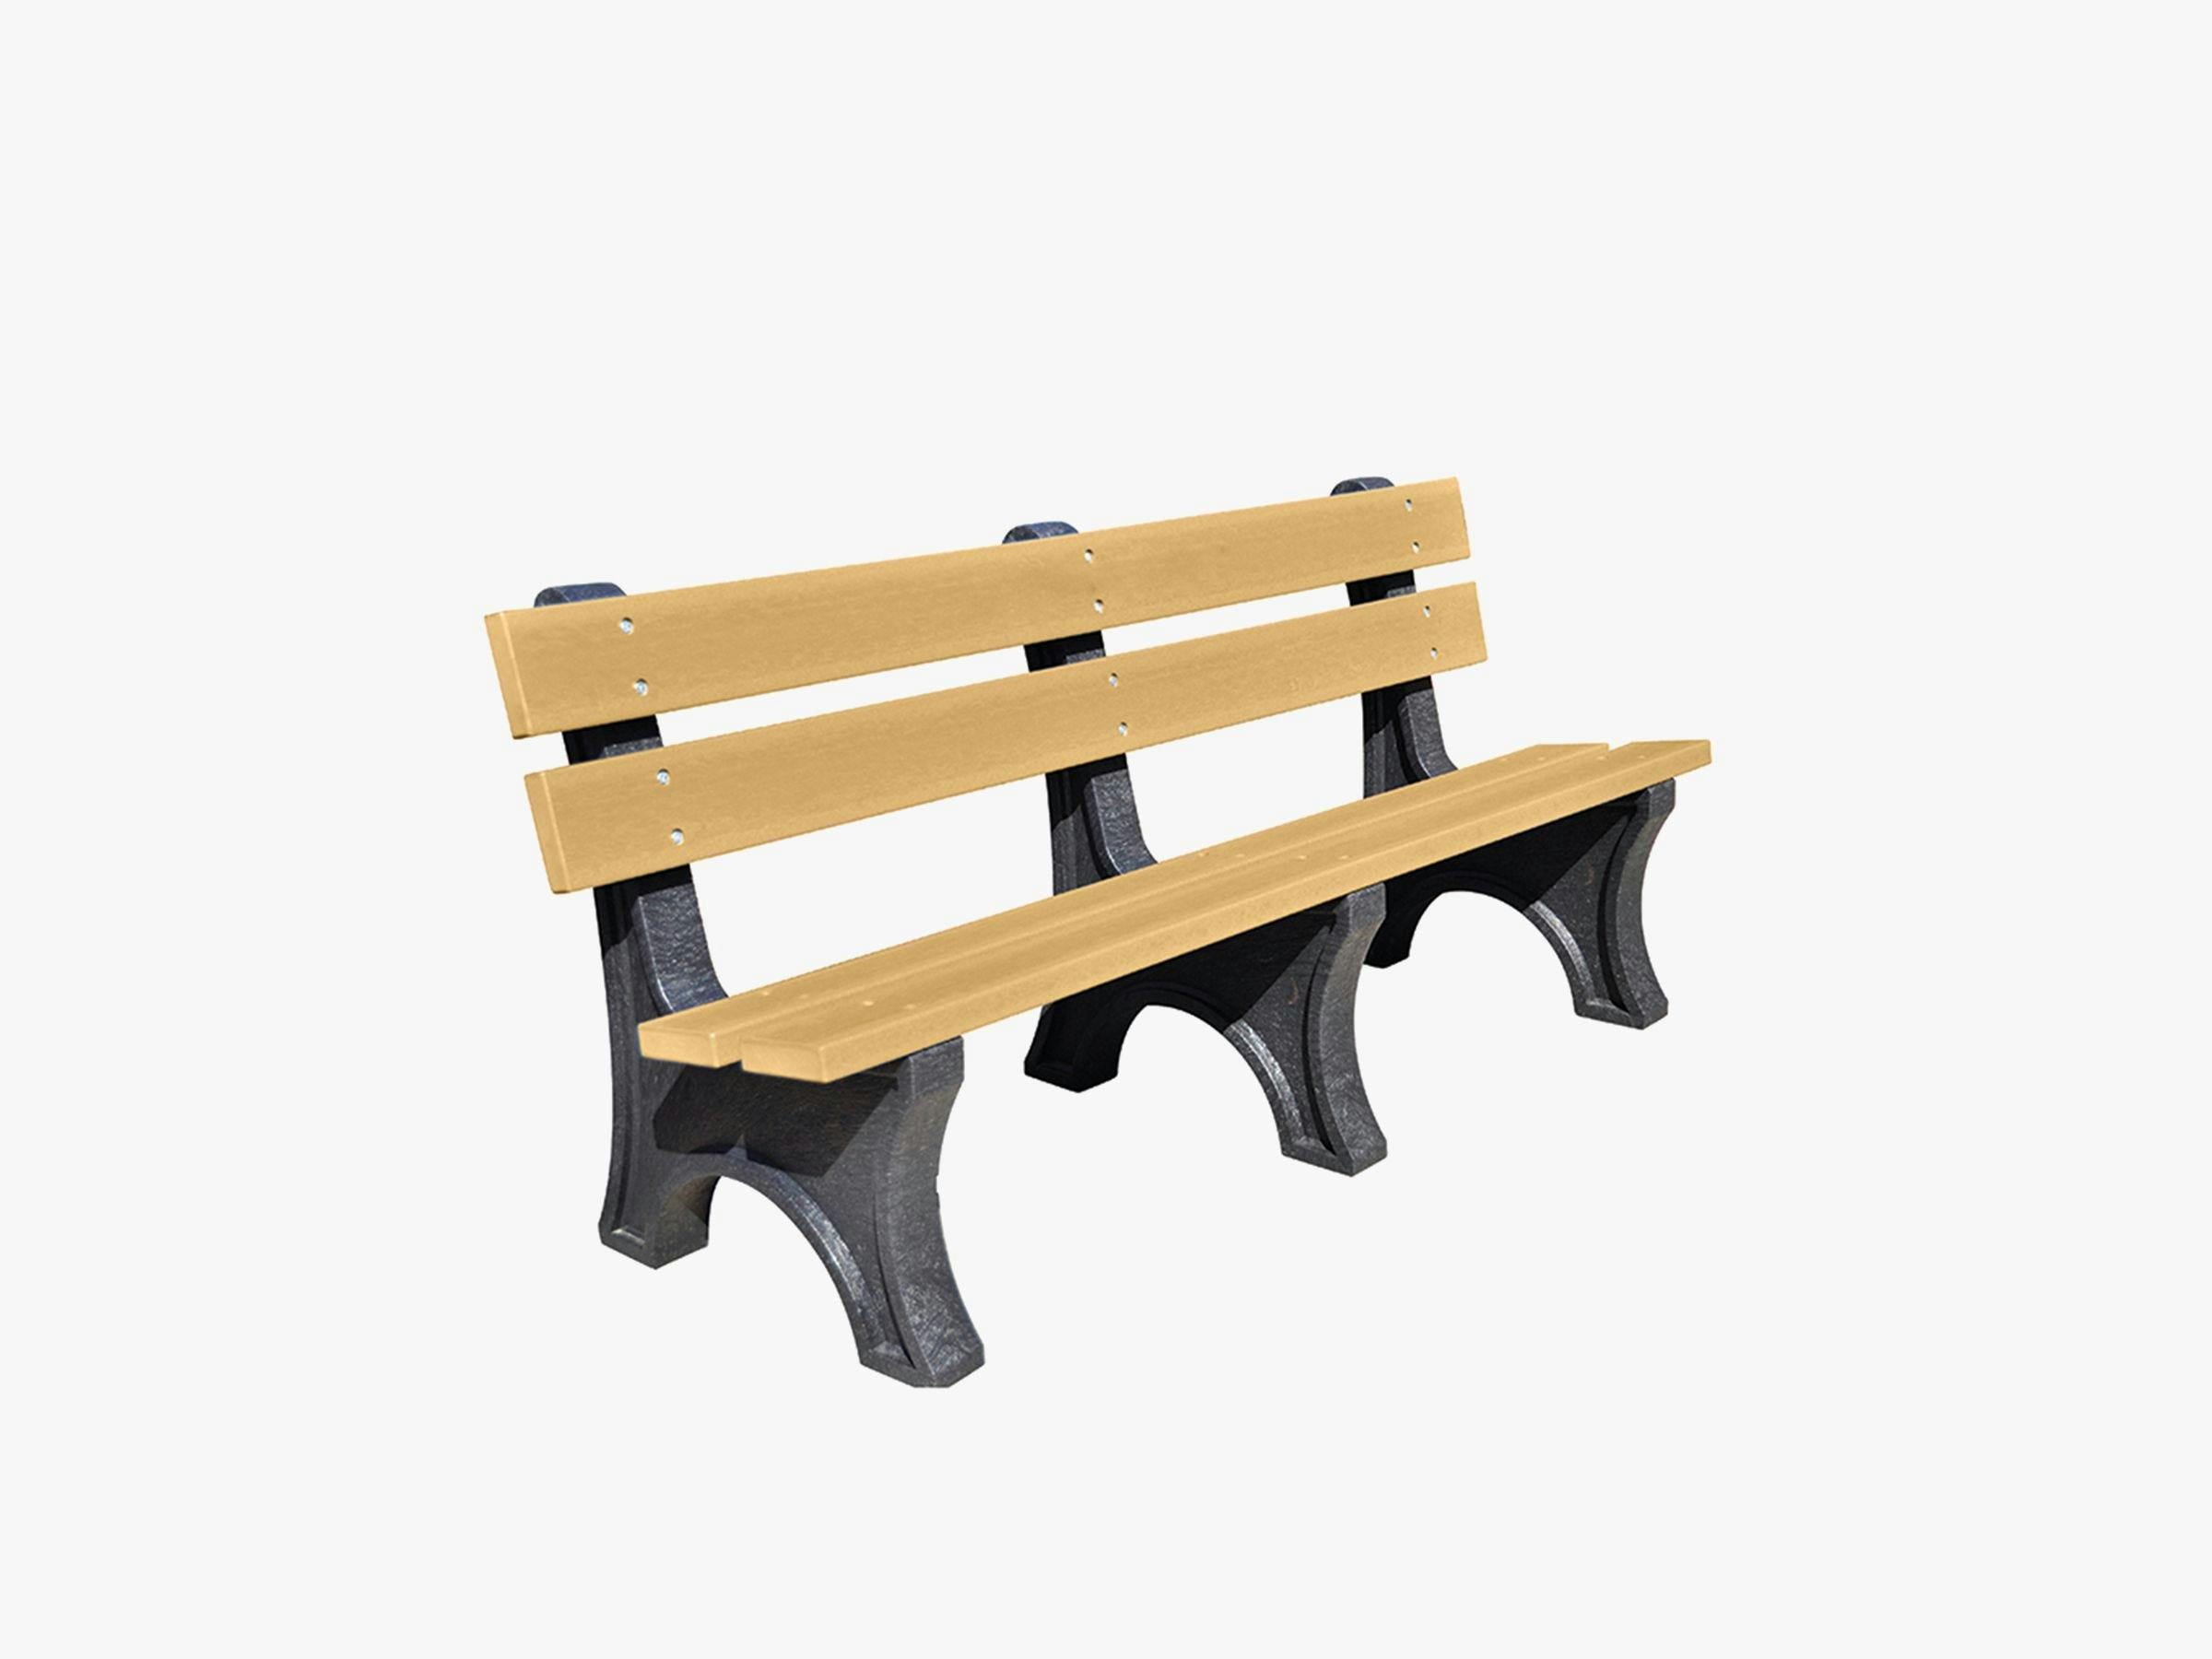 6' Recycled Bench, 2X6 Planks Cedar, Portable